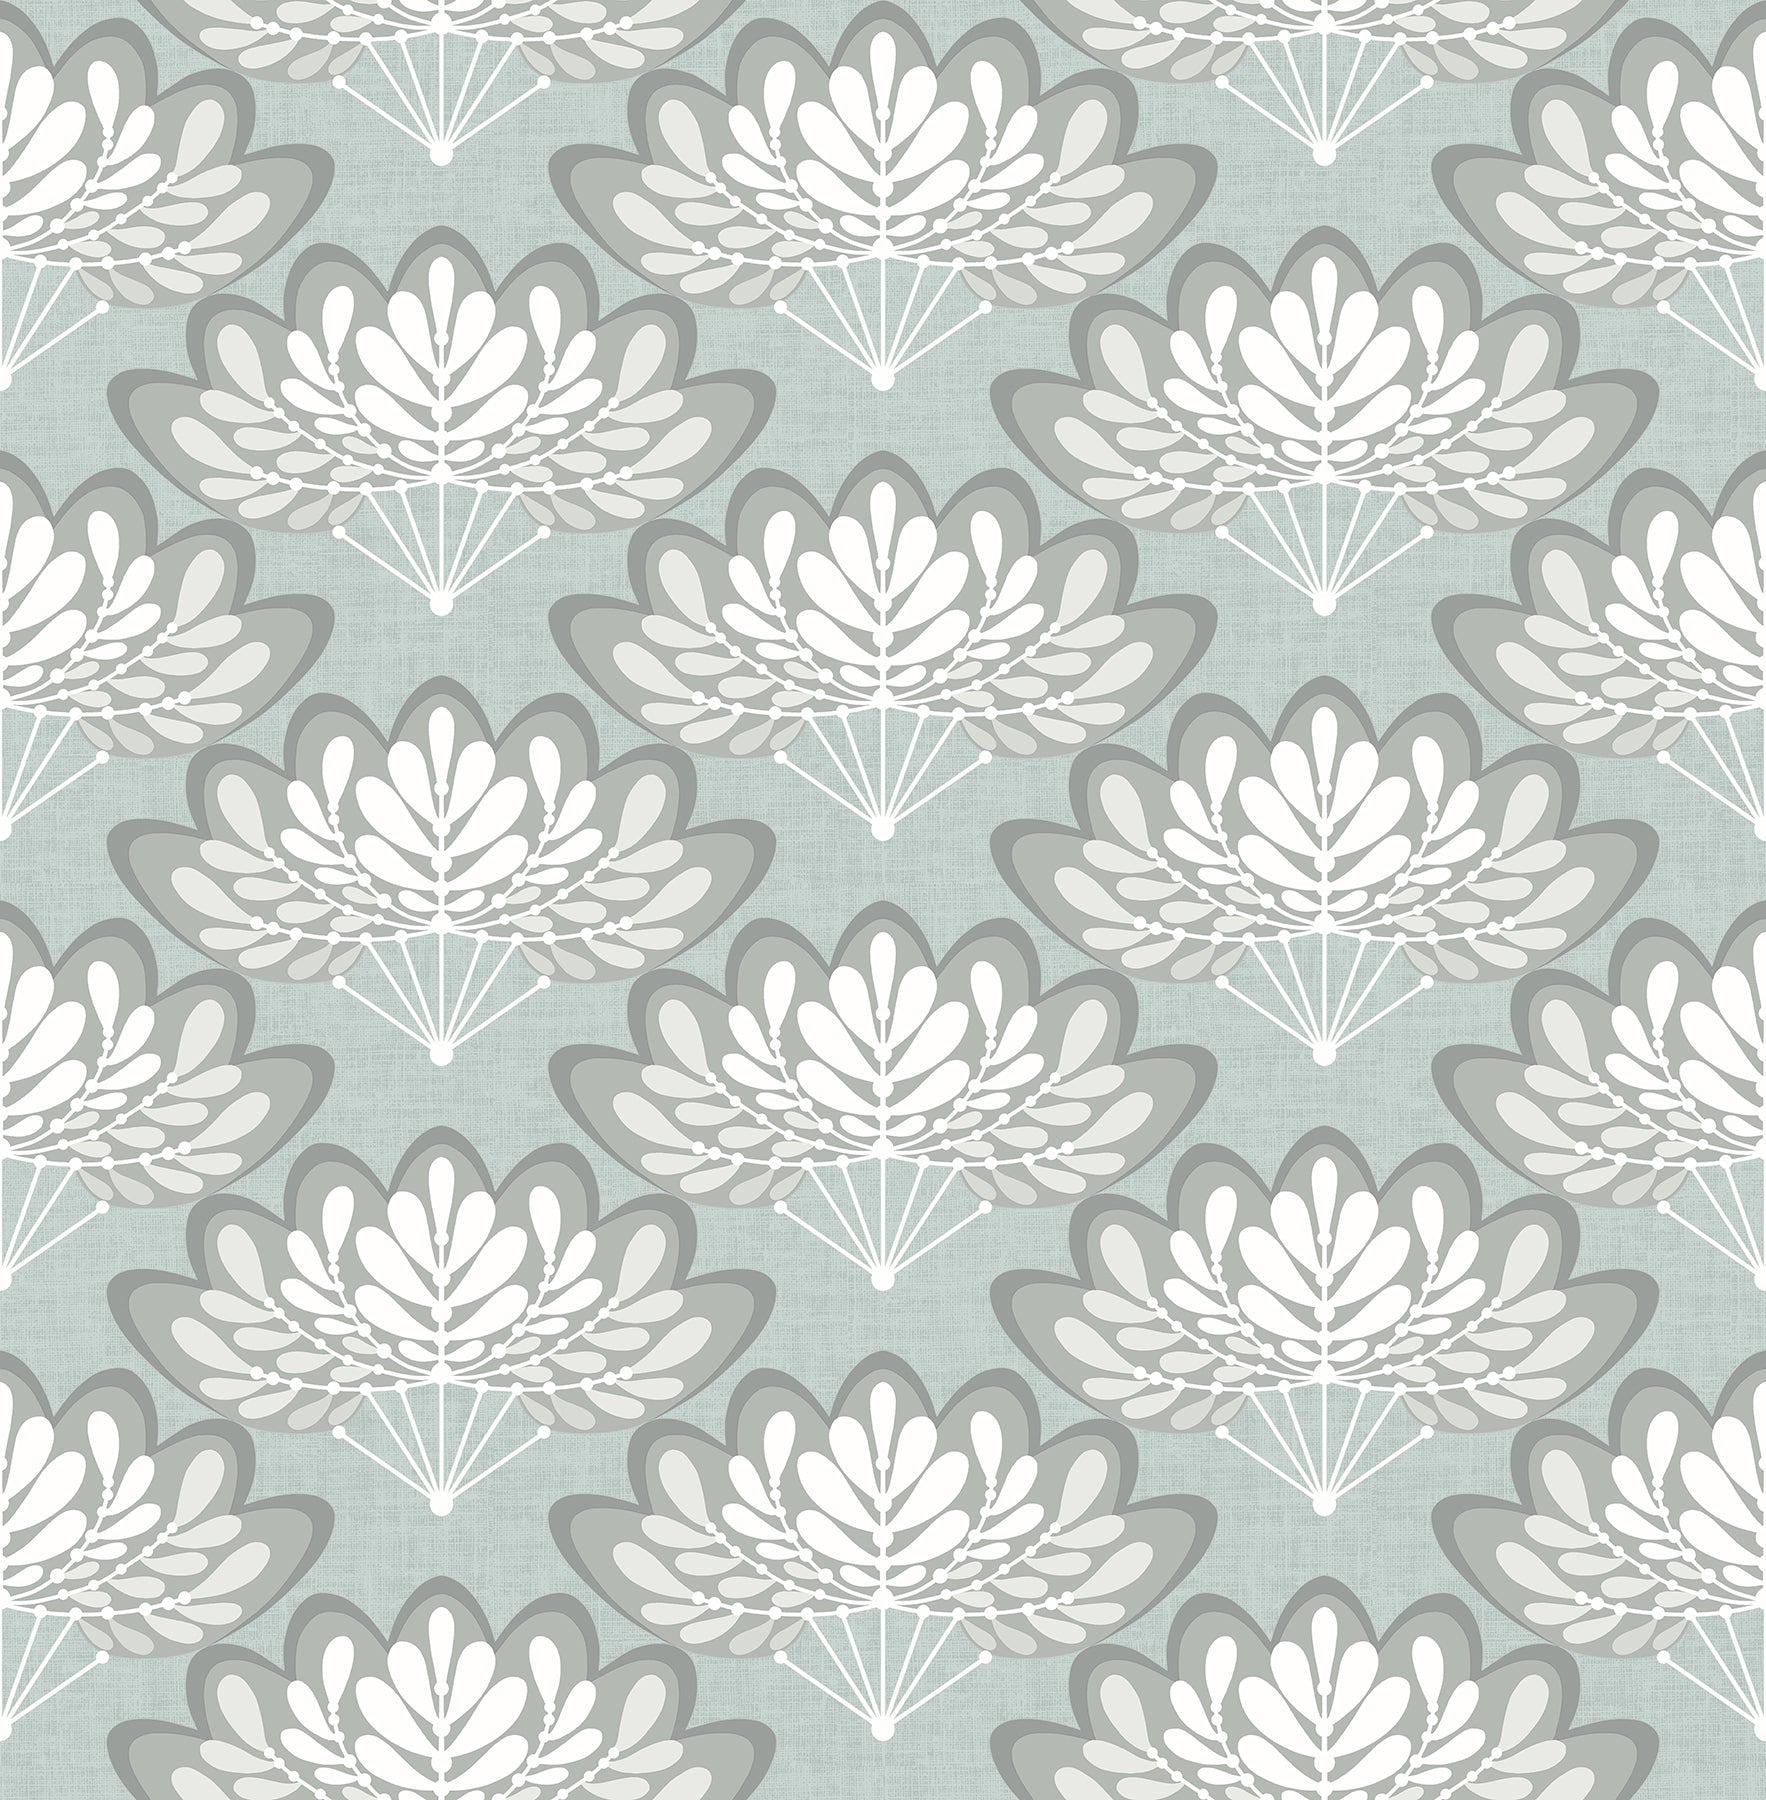 Order 2861-25755 Equinox Lotus Light Blue Floral Fans Blue A-Street Prints Wallpaper